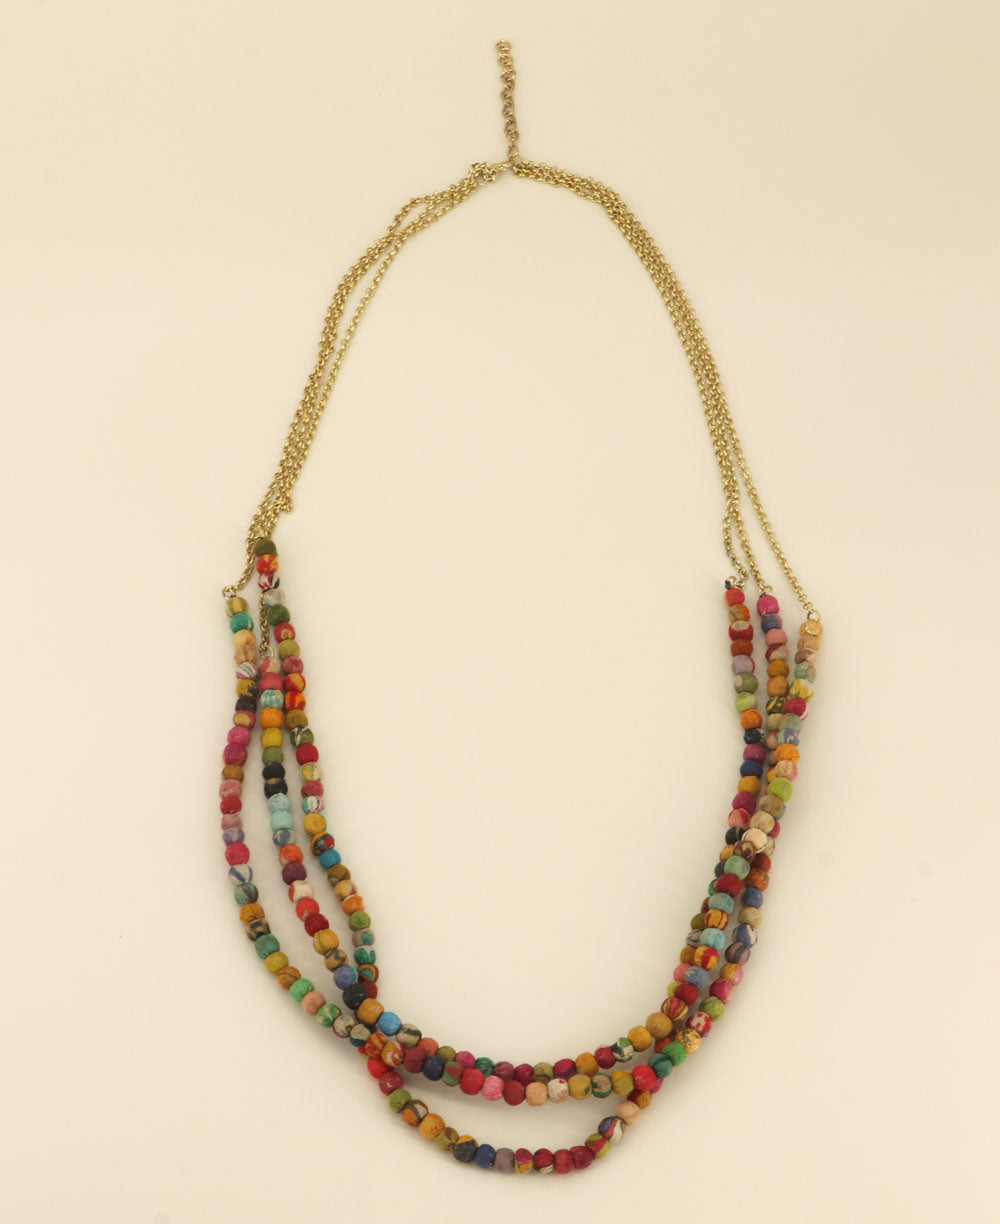 Handmade recycled fabric jewelry